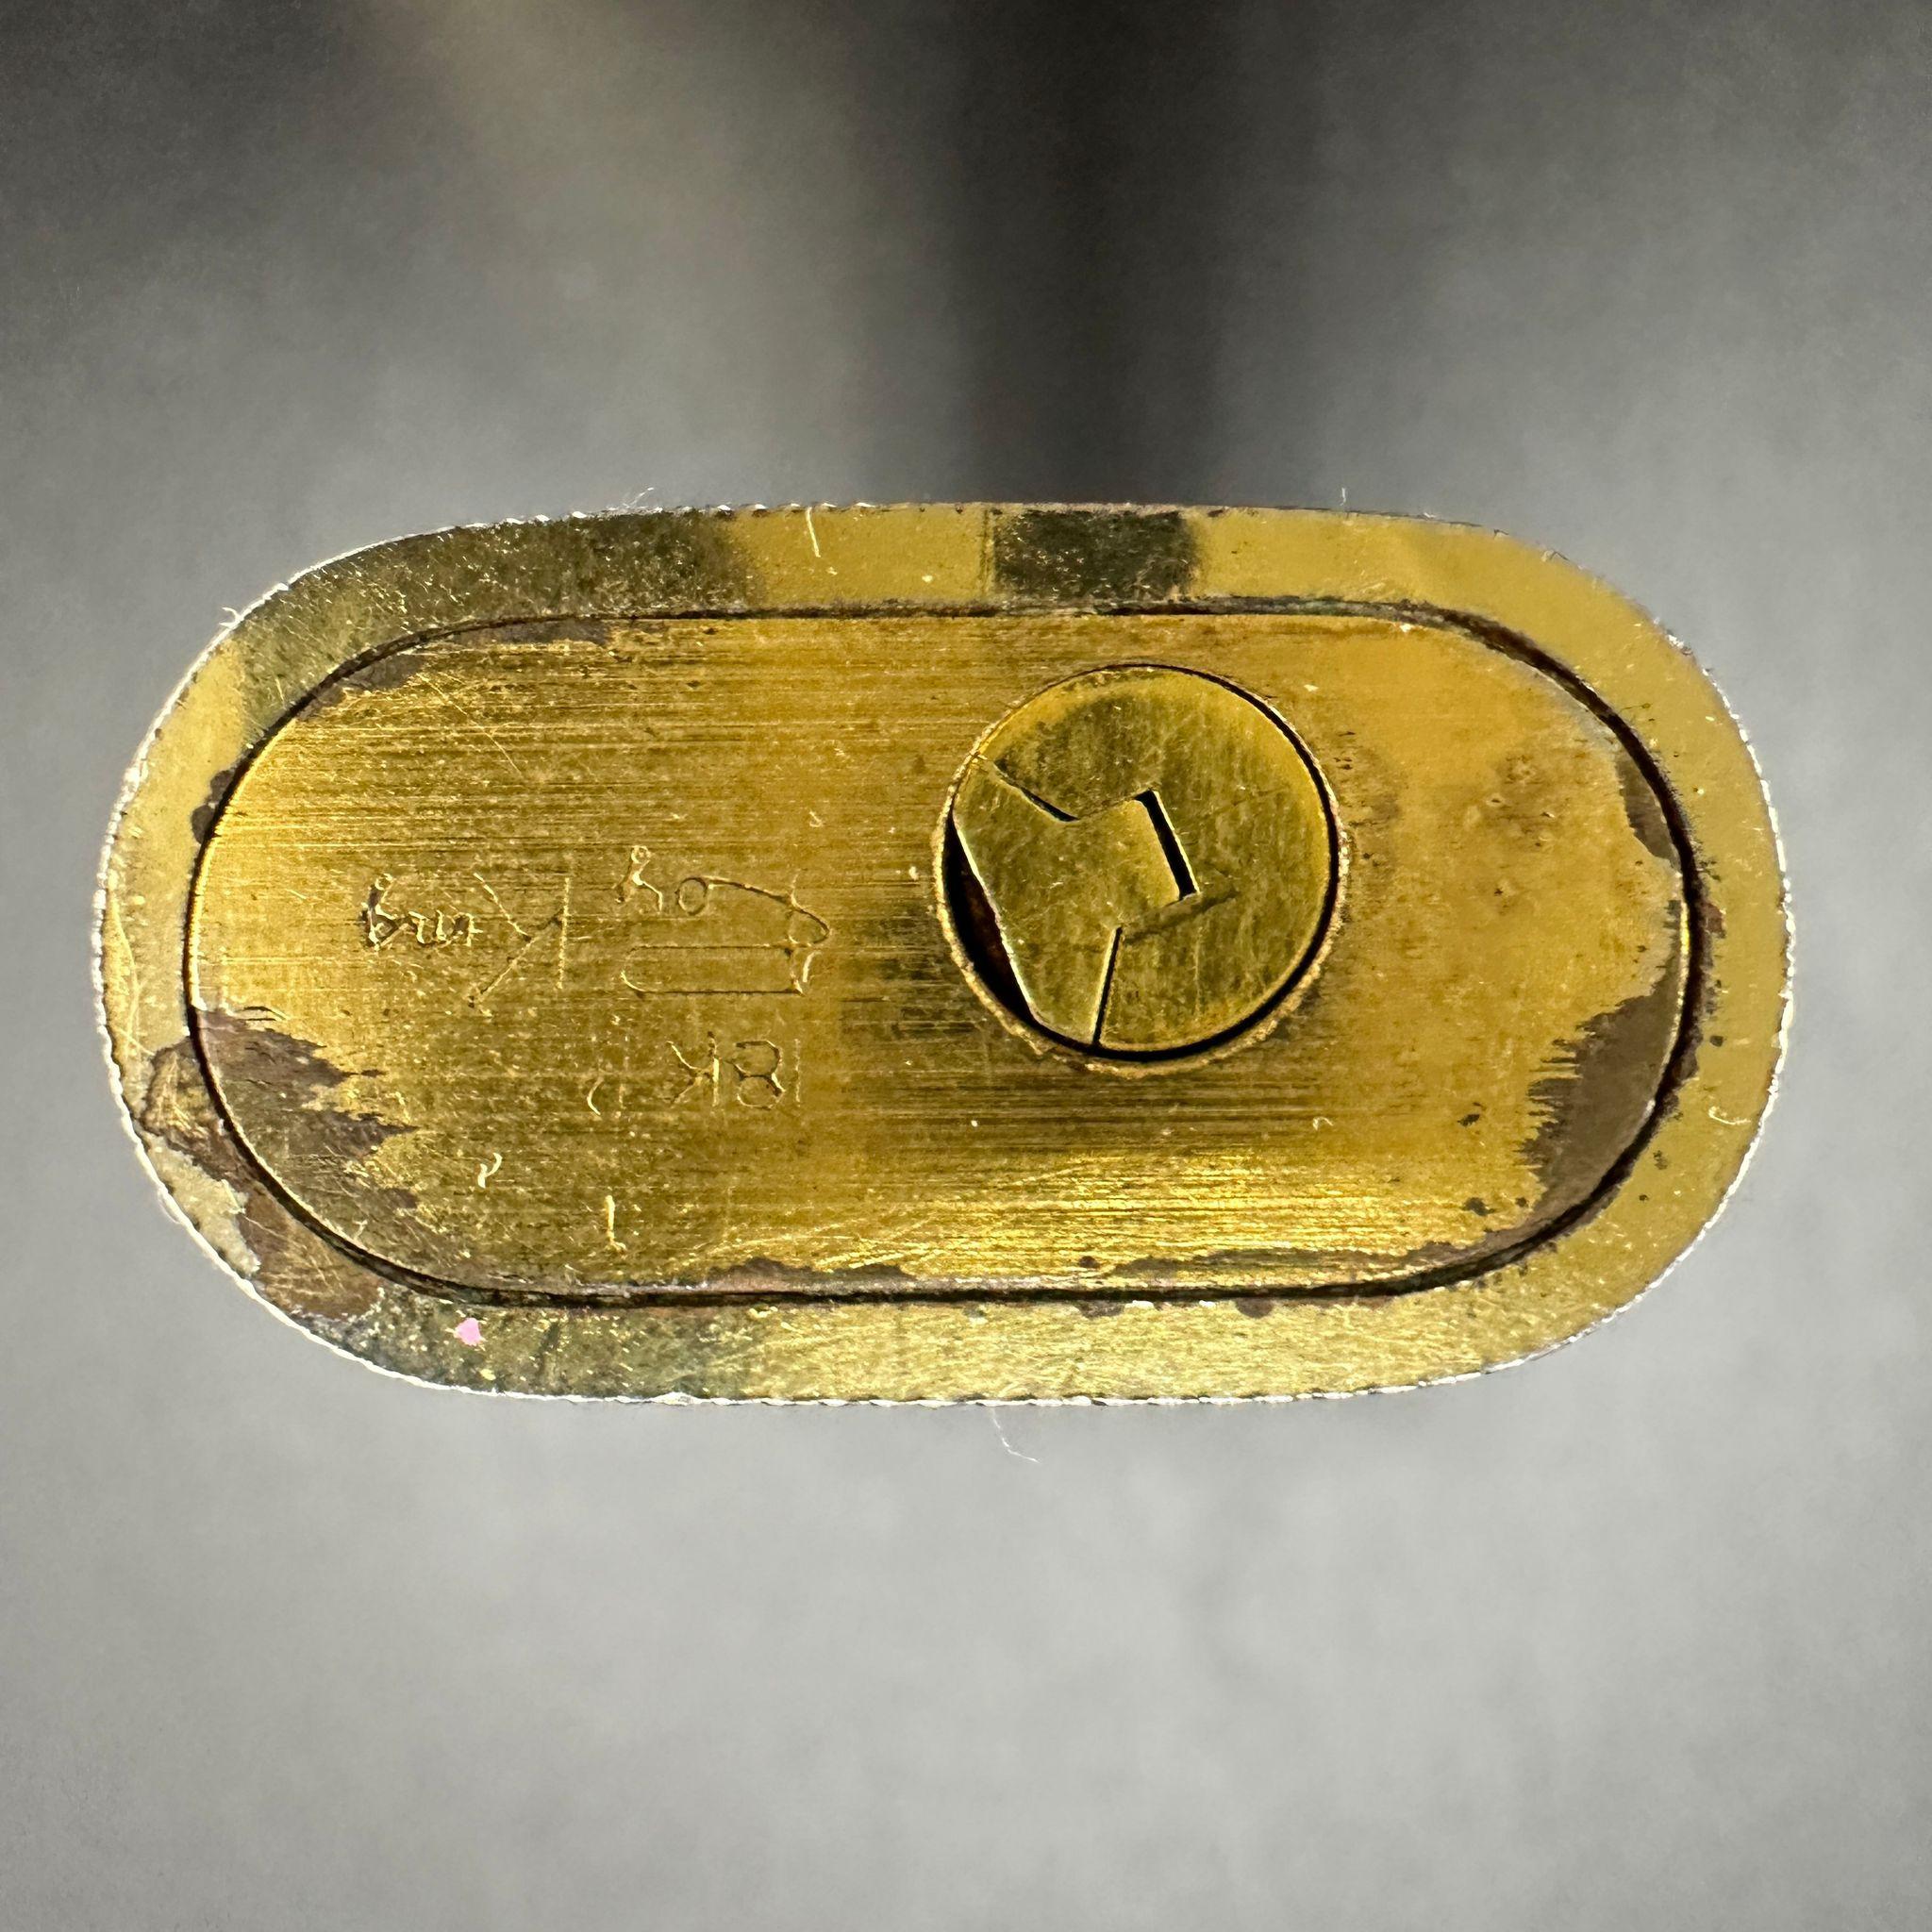 Very Rare Cartier “Royking” 18k Gold & Lacquer Vintage Lighter  3